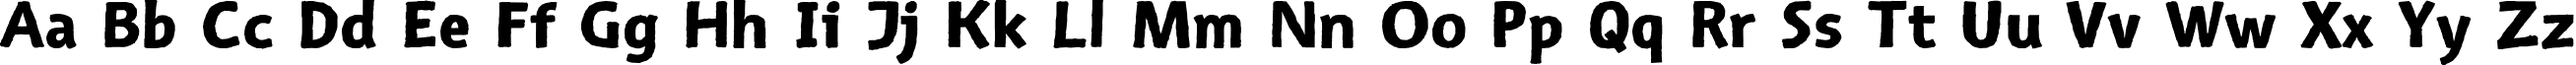 Пример написания английского алфавита шрифтом Nazhdak Bold